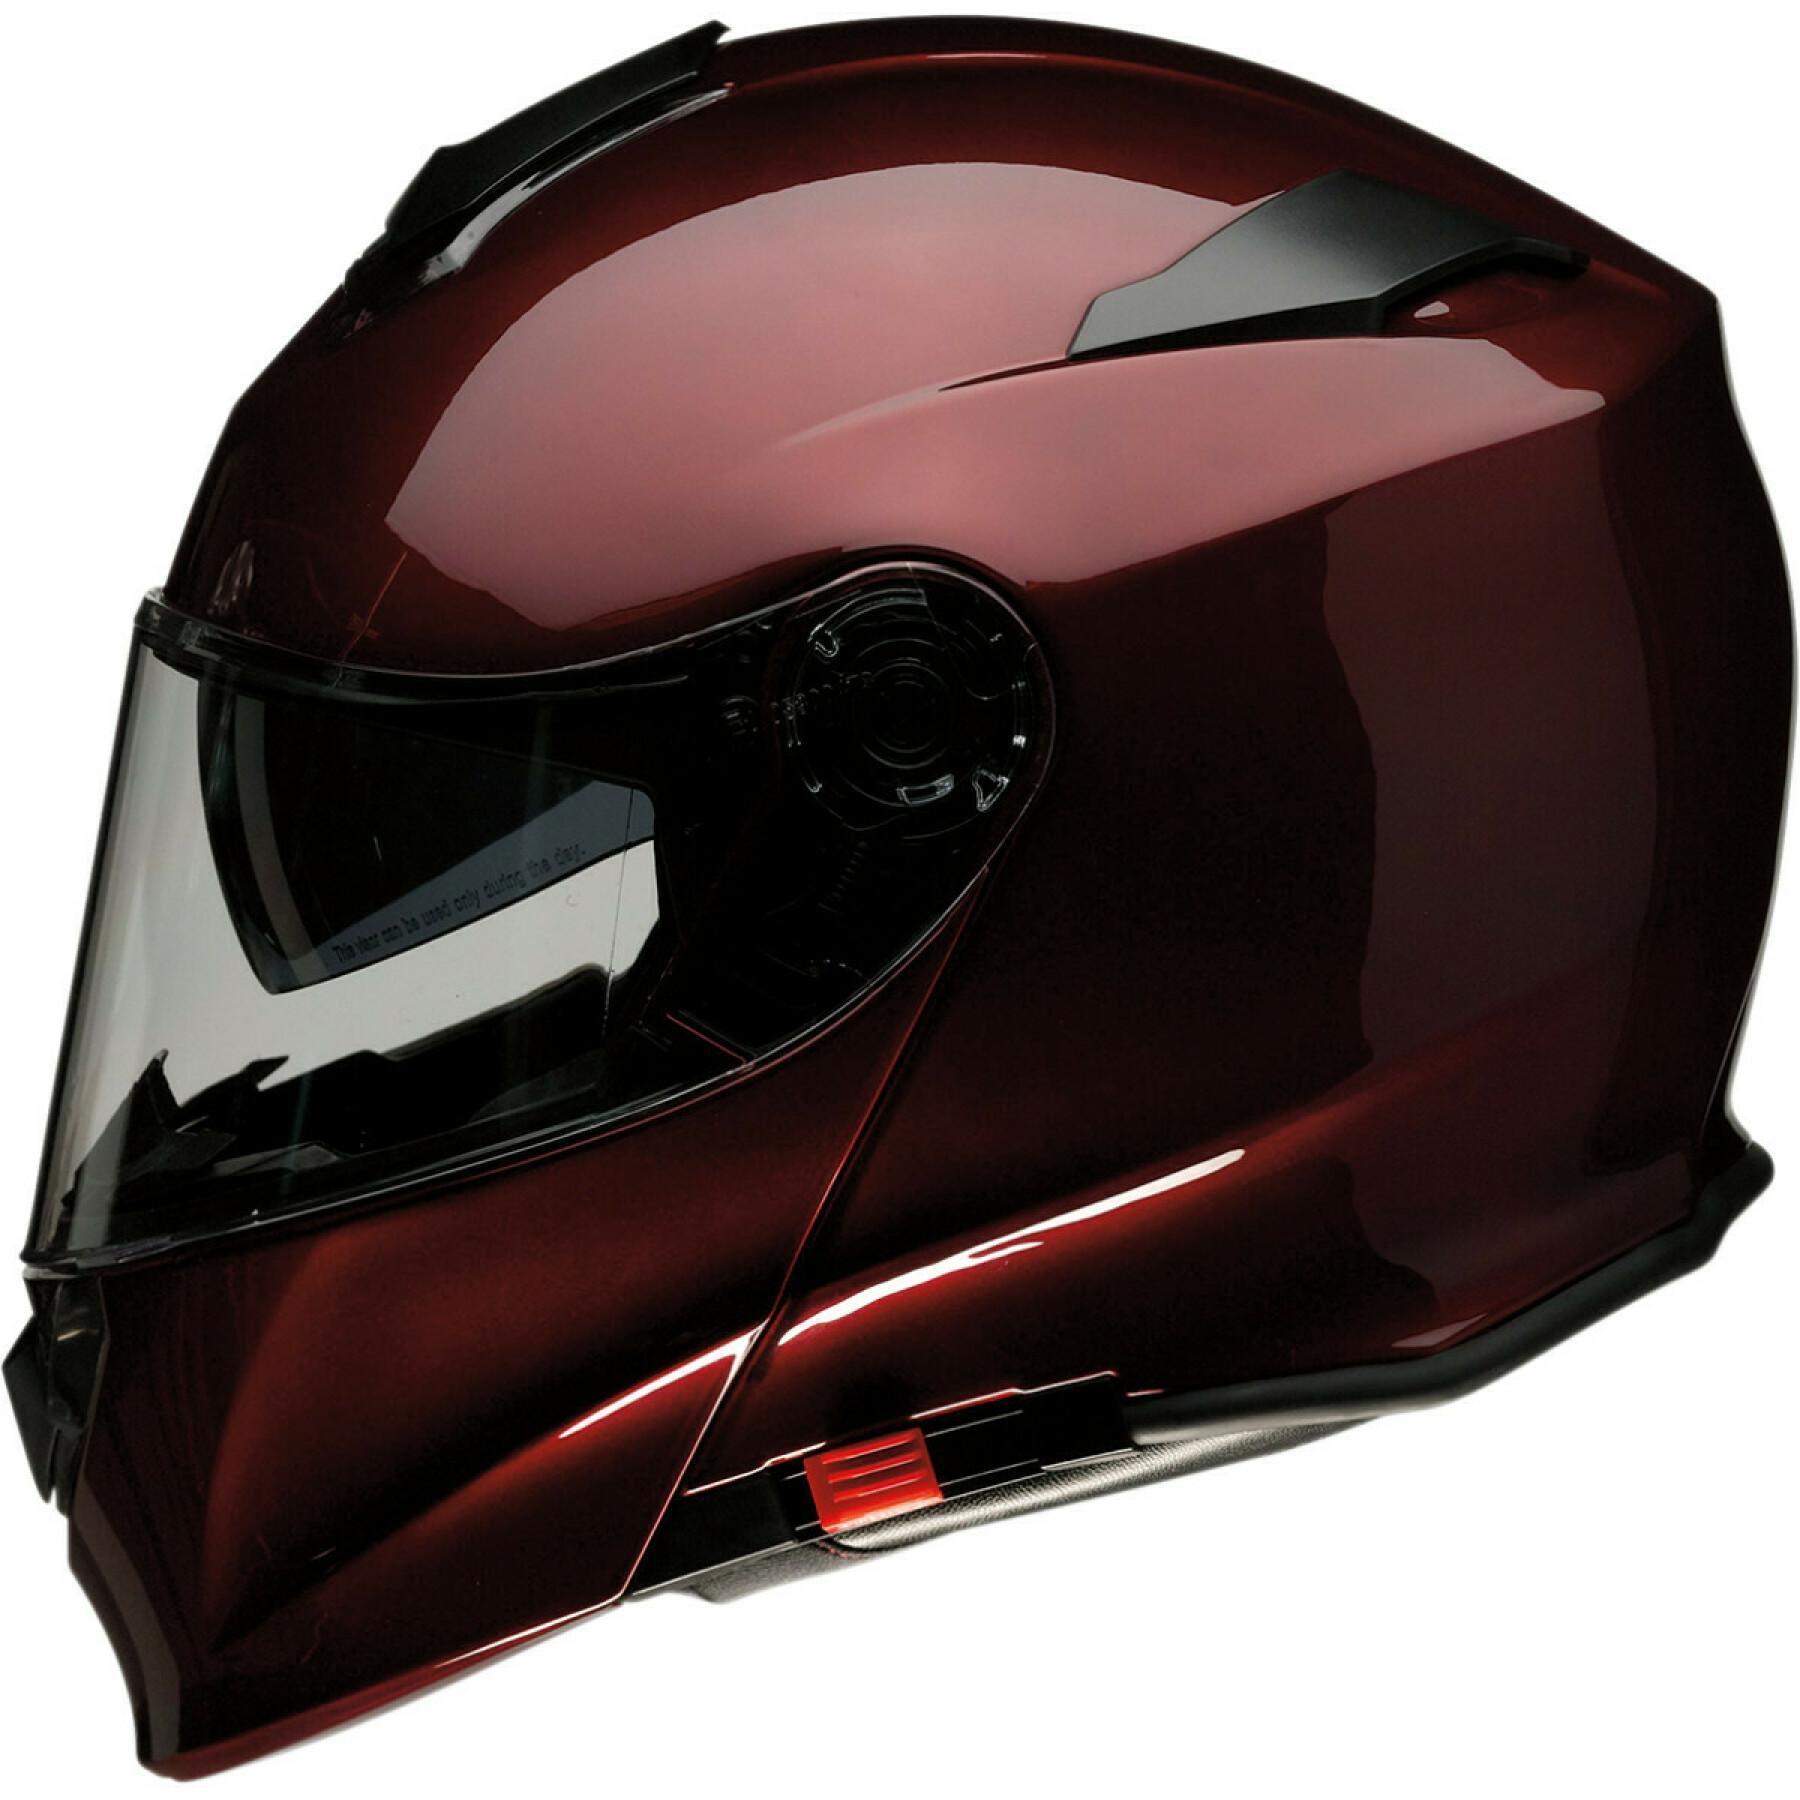 Full face motorcycle helmet Z1R solaris wine